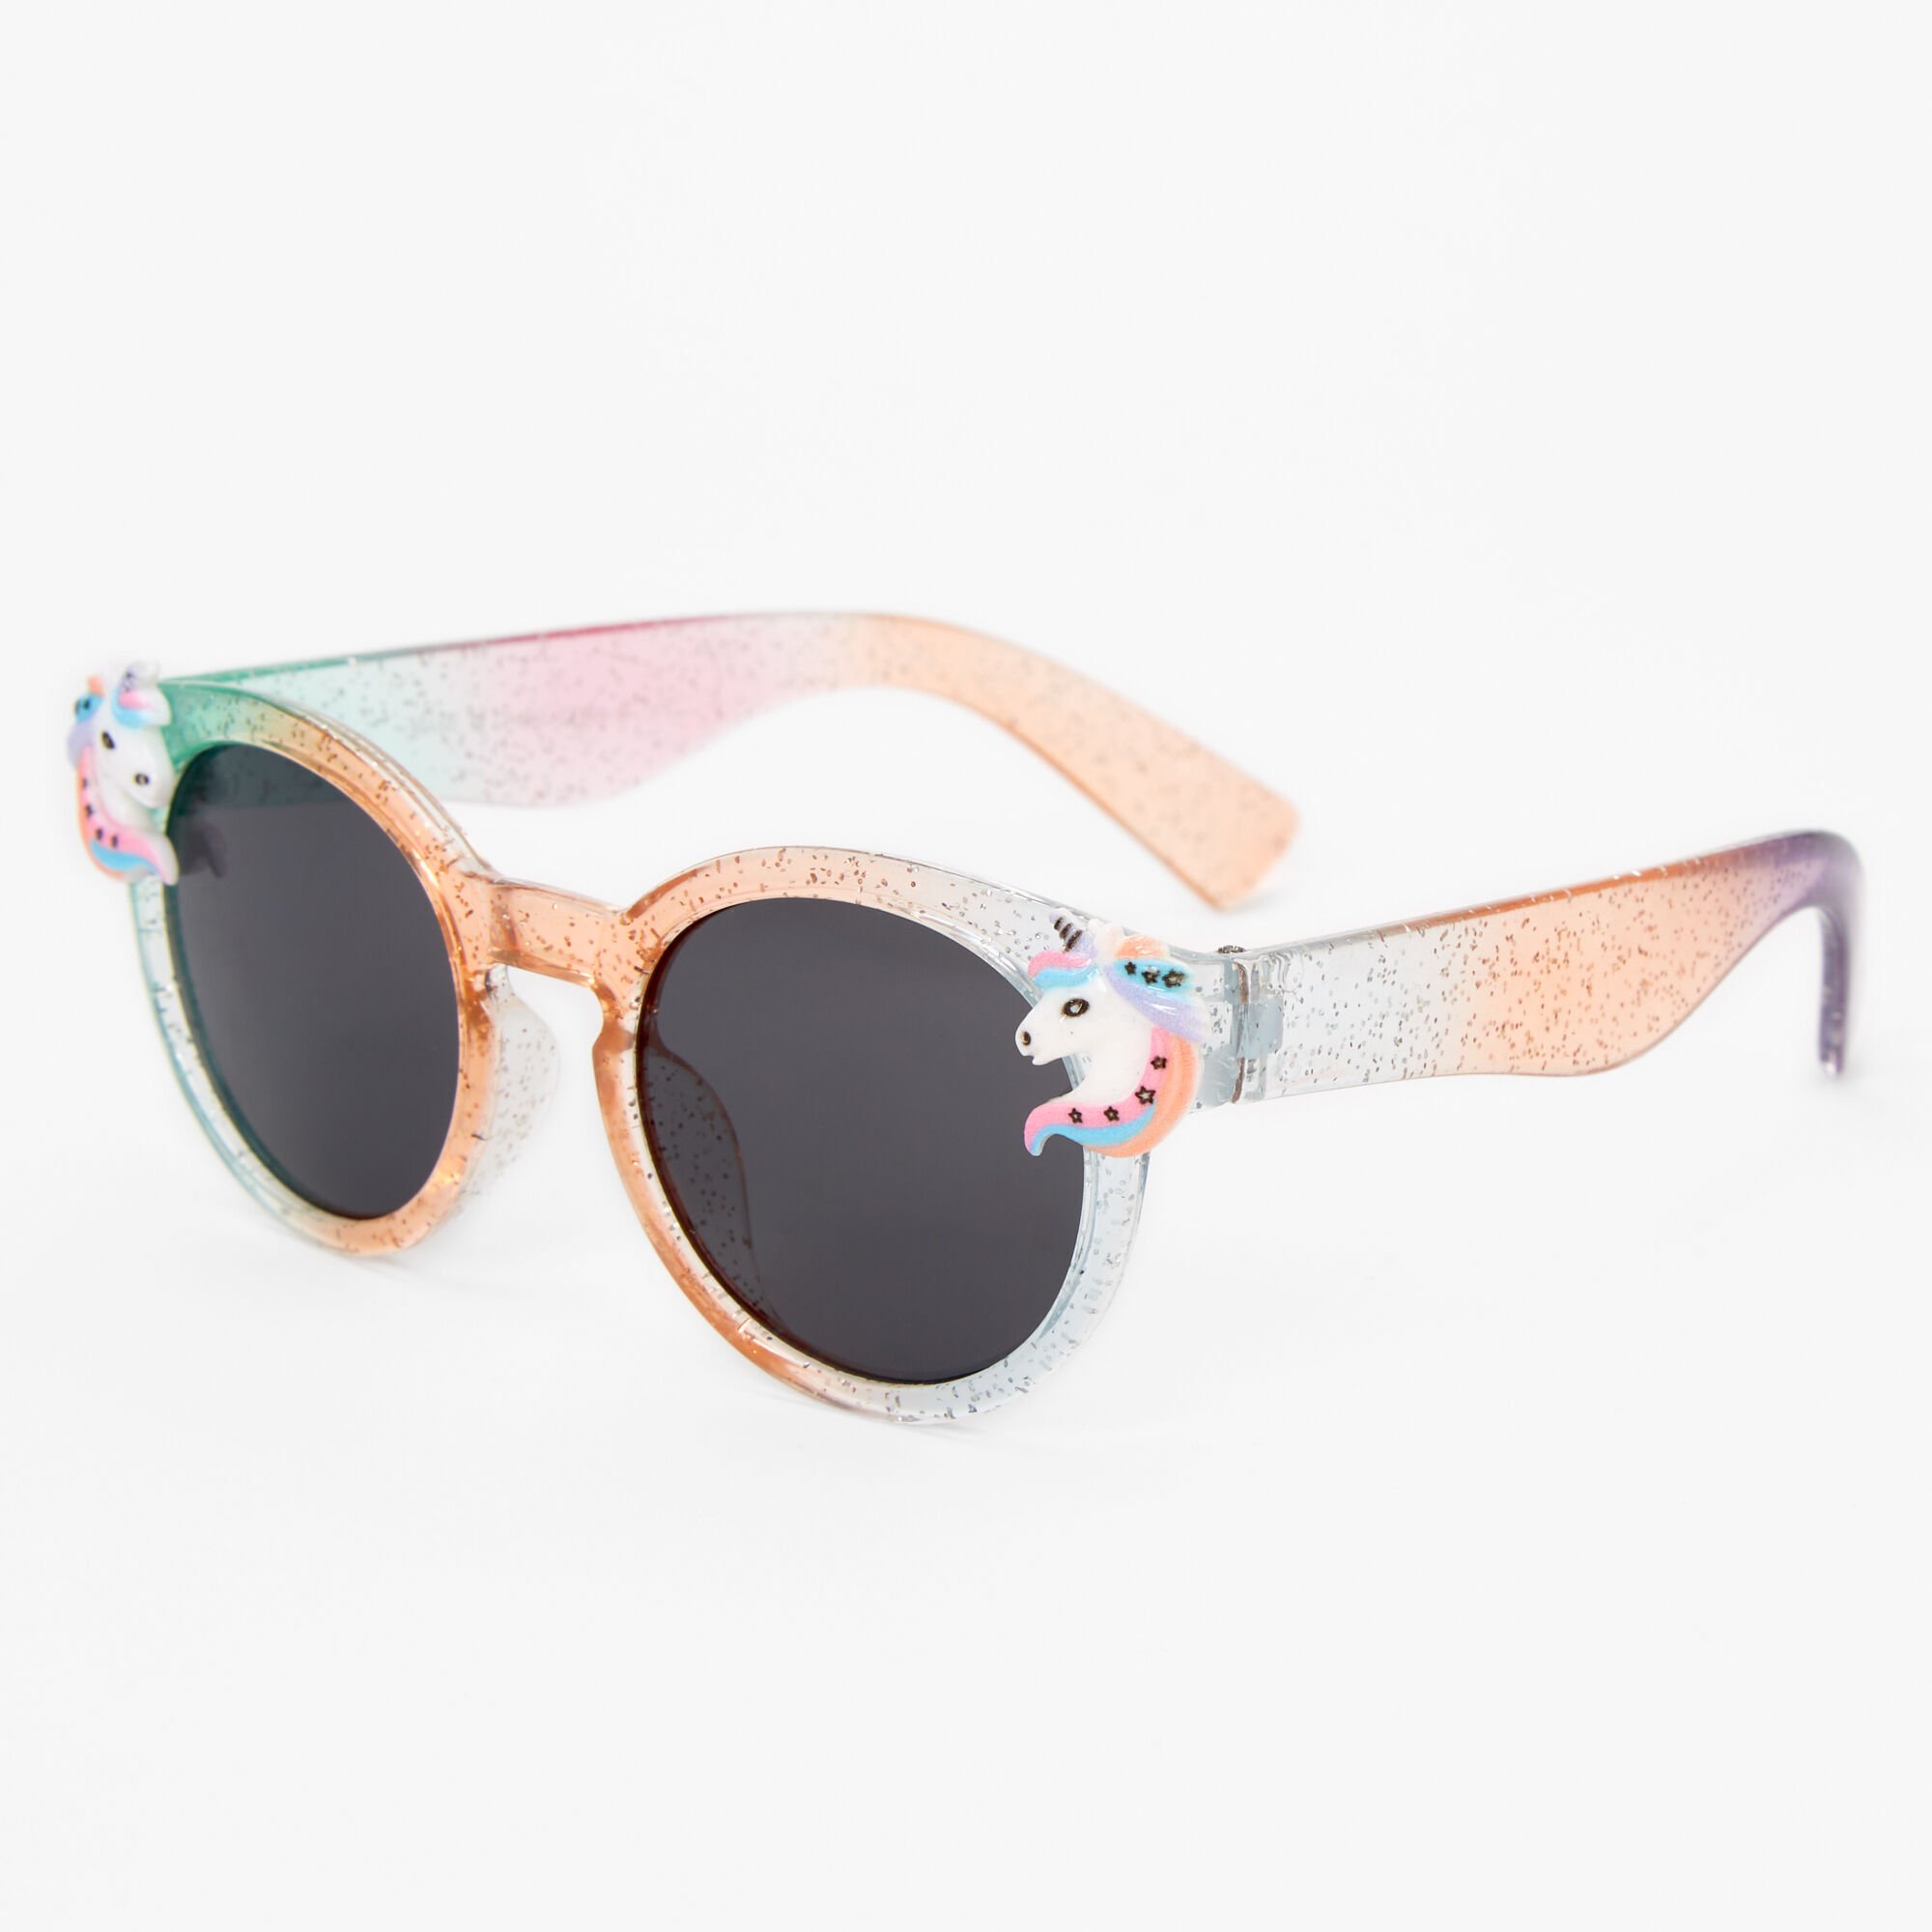 View Claires Club Unicorn Glitter Mod Sunglasses Rainbow information